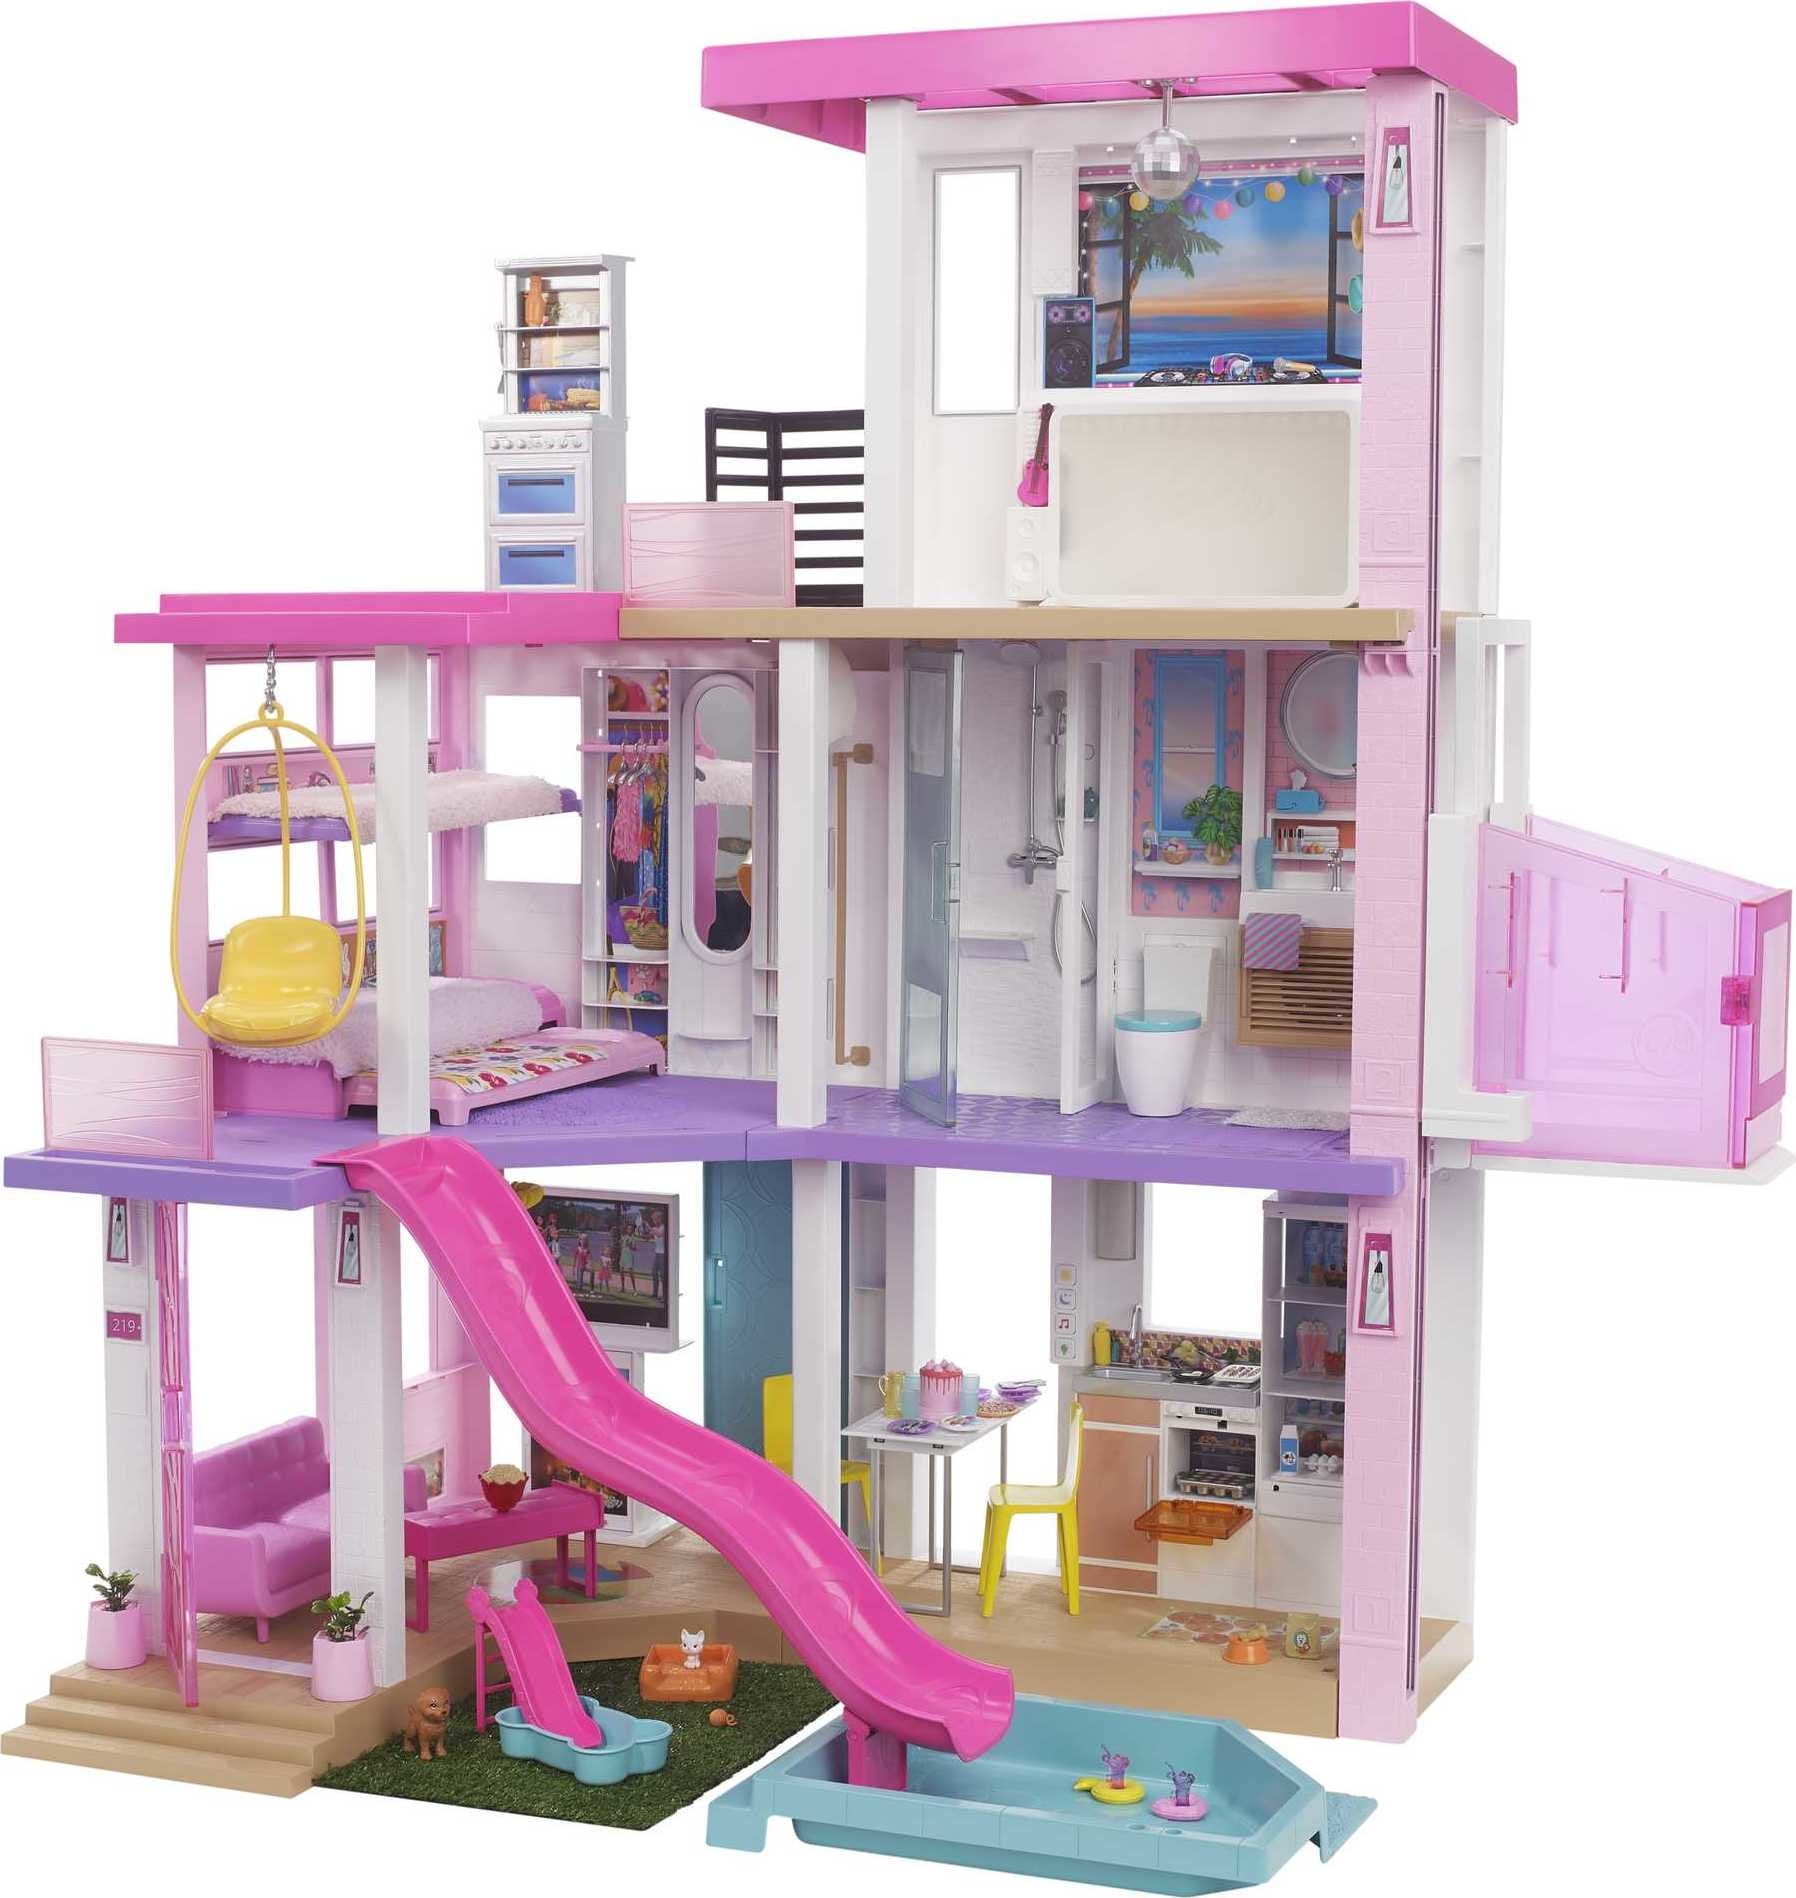 Playmobil SA-3 Man Figure City Life Construction Adventure Farm School Dollhouse 